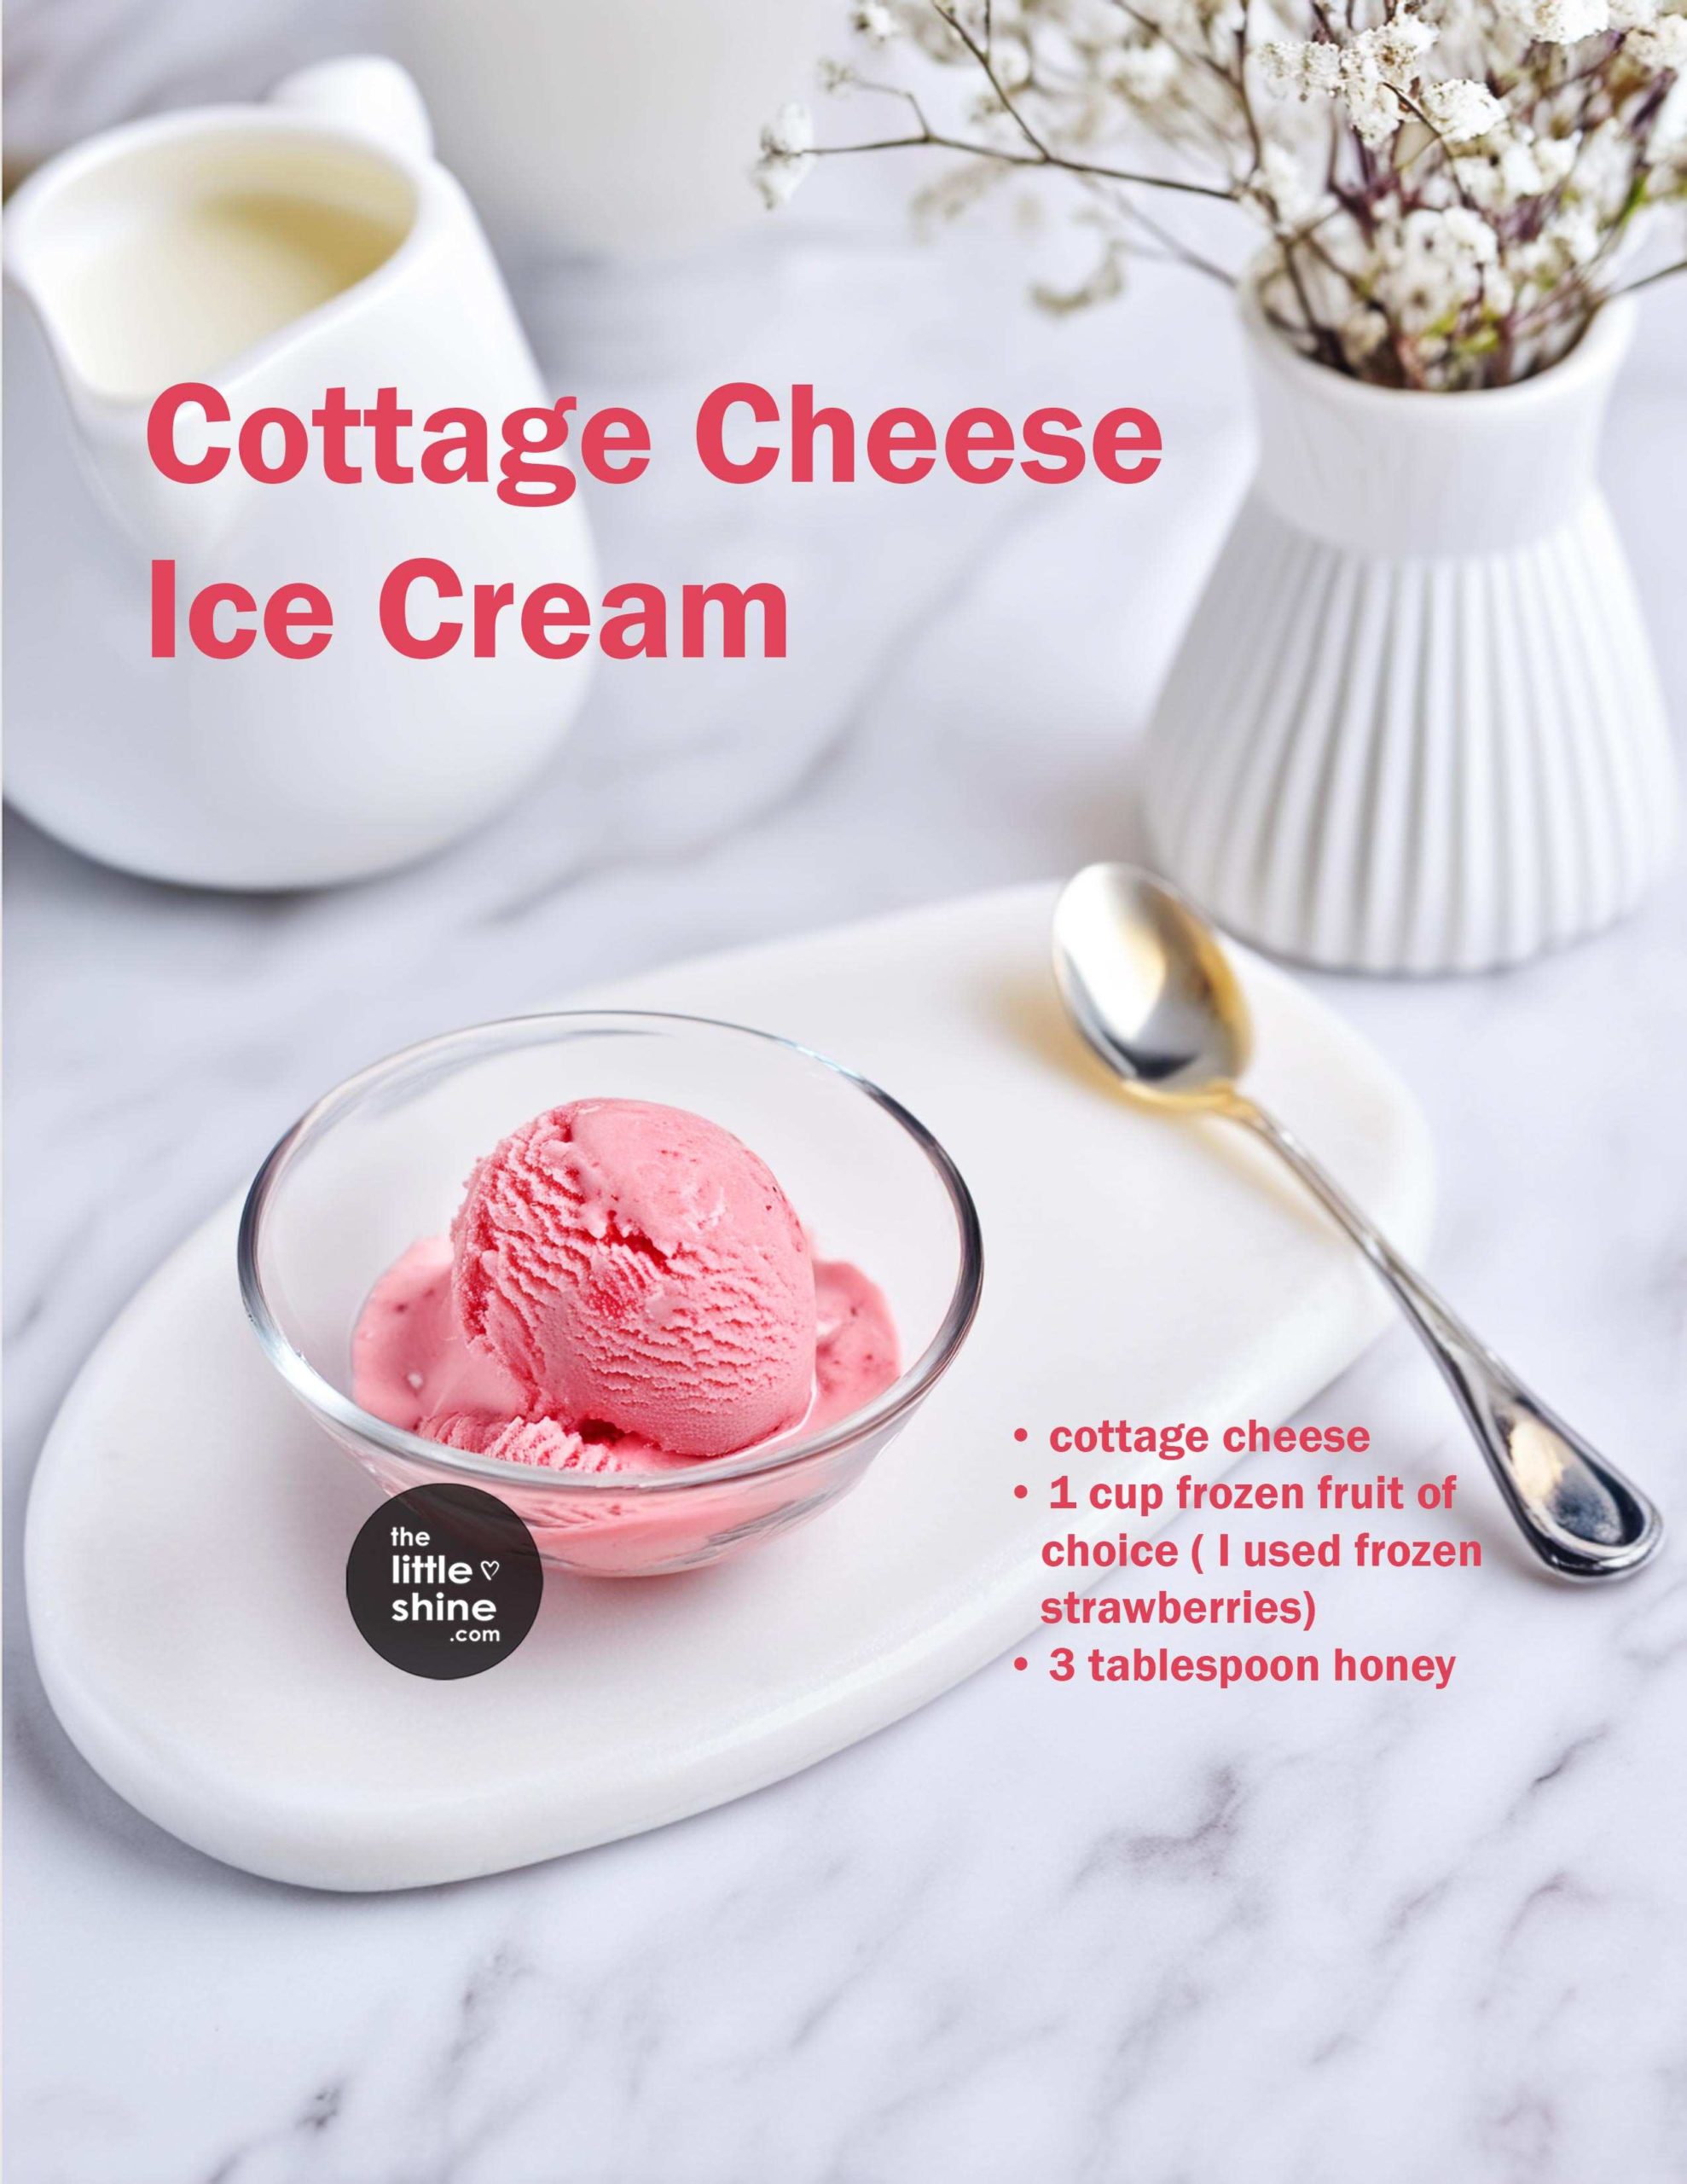  Cottage Cheese Ice Cream